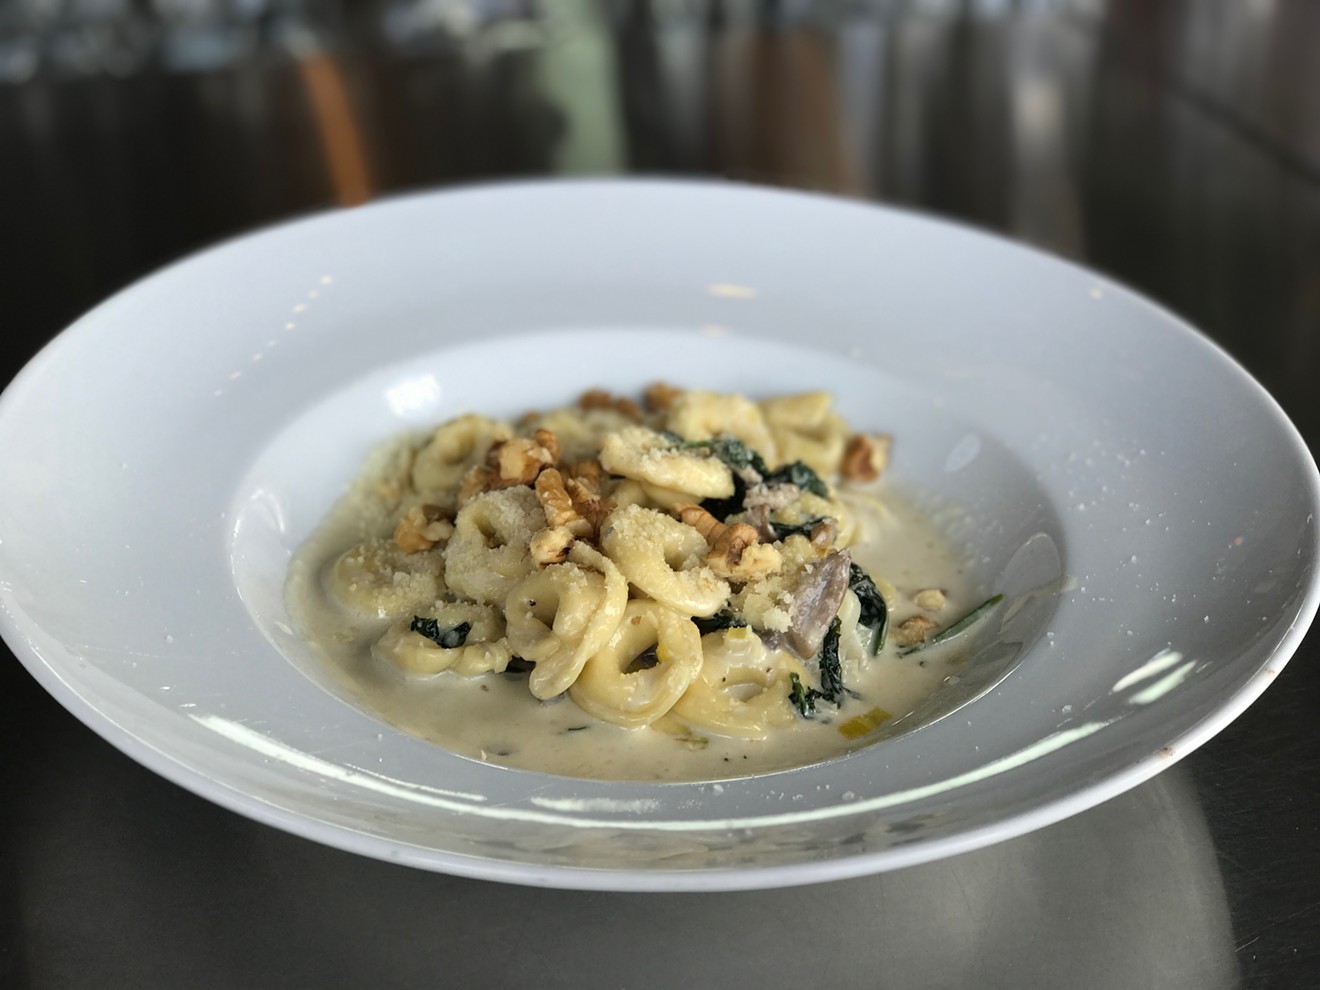 Cibo Divino's pasta dishes are always winners.